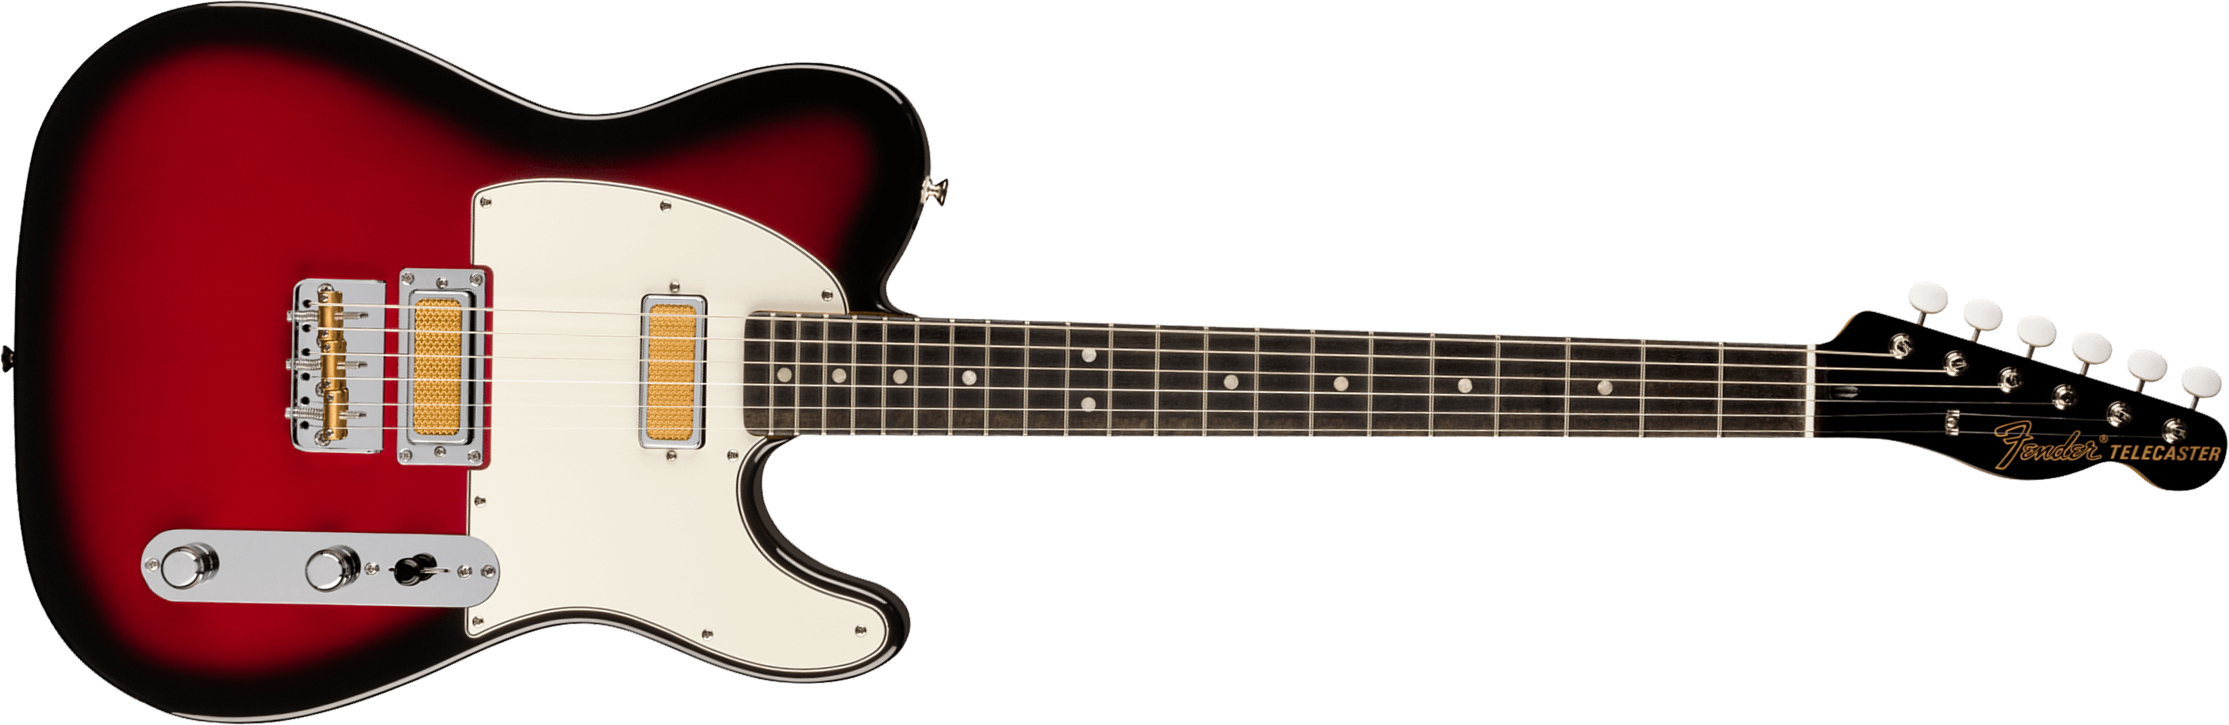 Fender Tele Gold Foil Ltd Mex 2mh Ht Eb - Candy Apple Burst - Tel shape electric guitar - Main picture